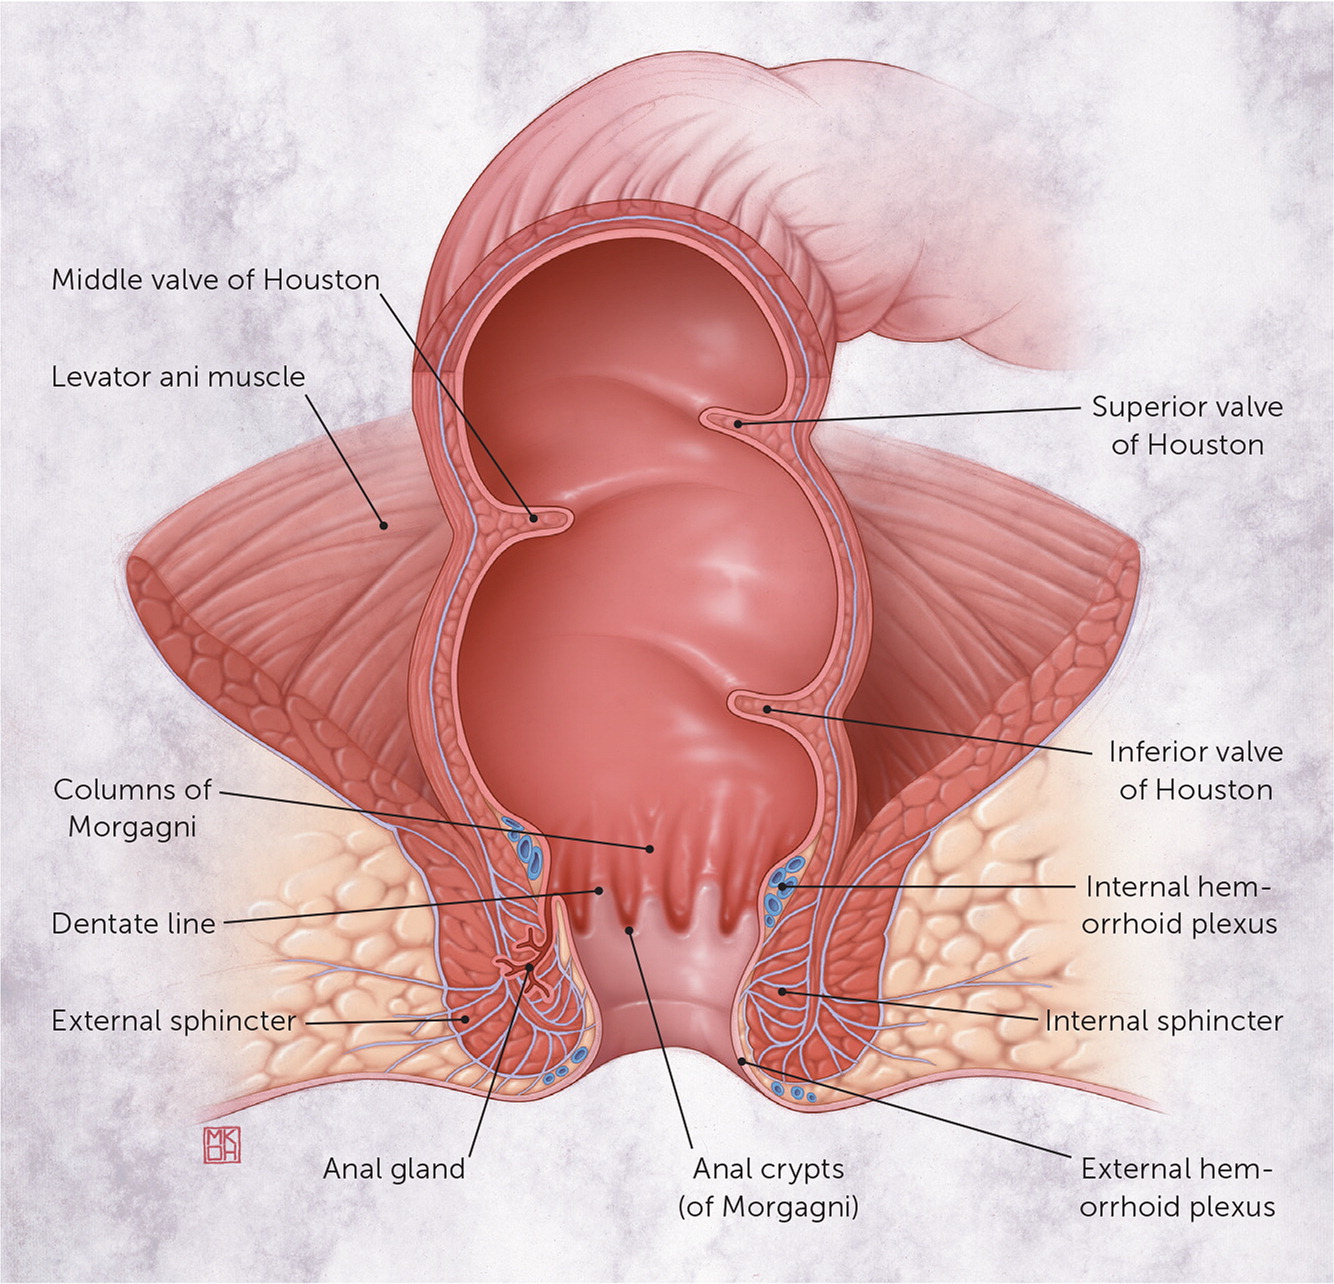 Painful lump near anus